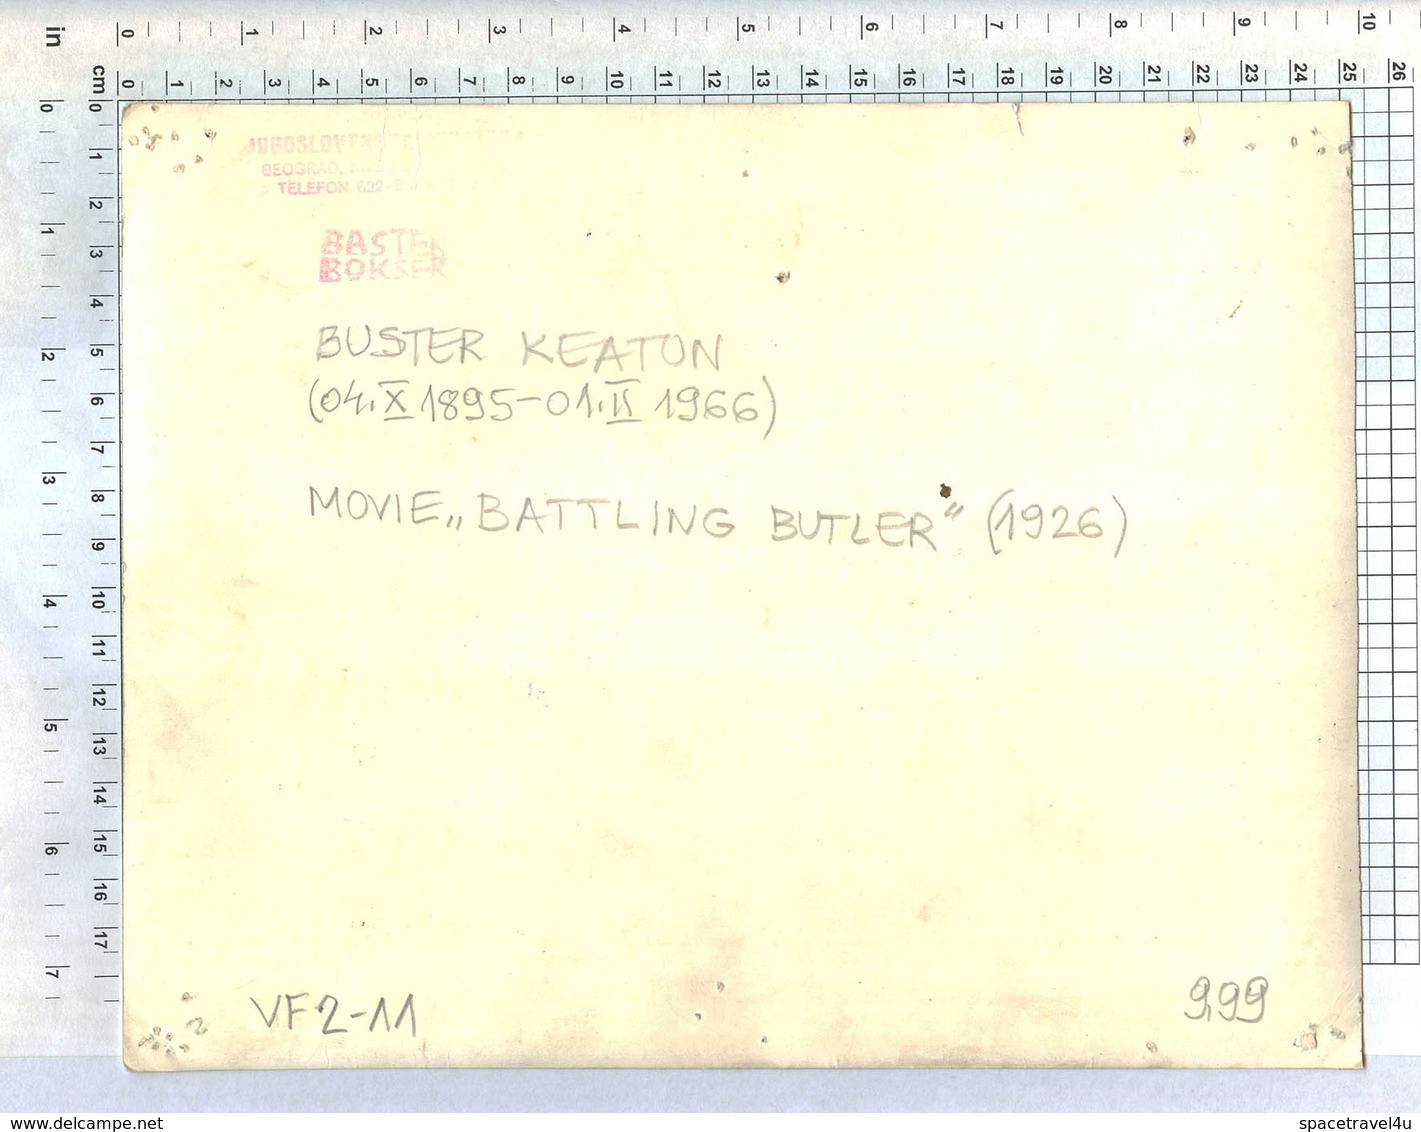 BUSTER KEATON (MOVIE "(Battling Butler" 1926.) - Vintage LOBBY CARD - MINI POSTER (VF2-11) - Cinema Advertisement